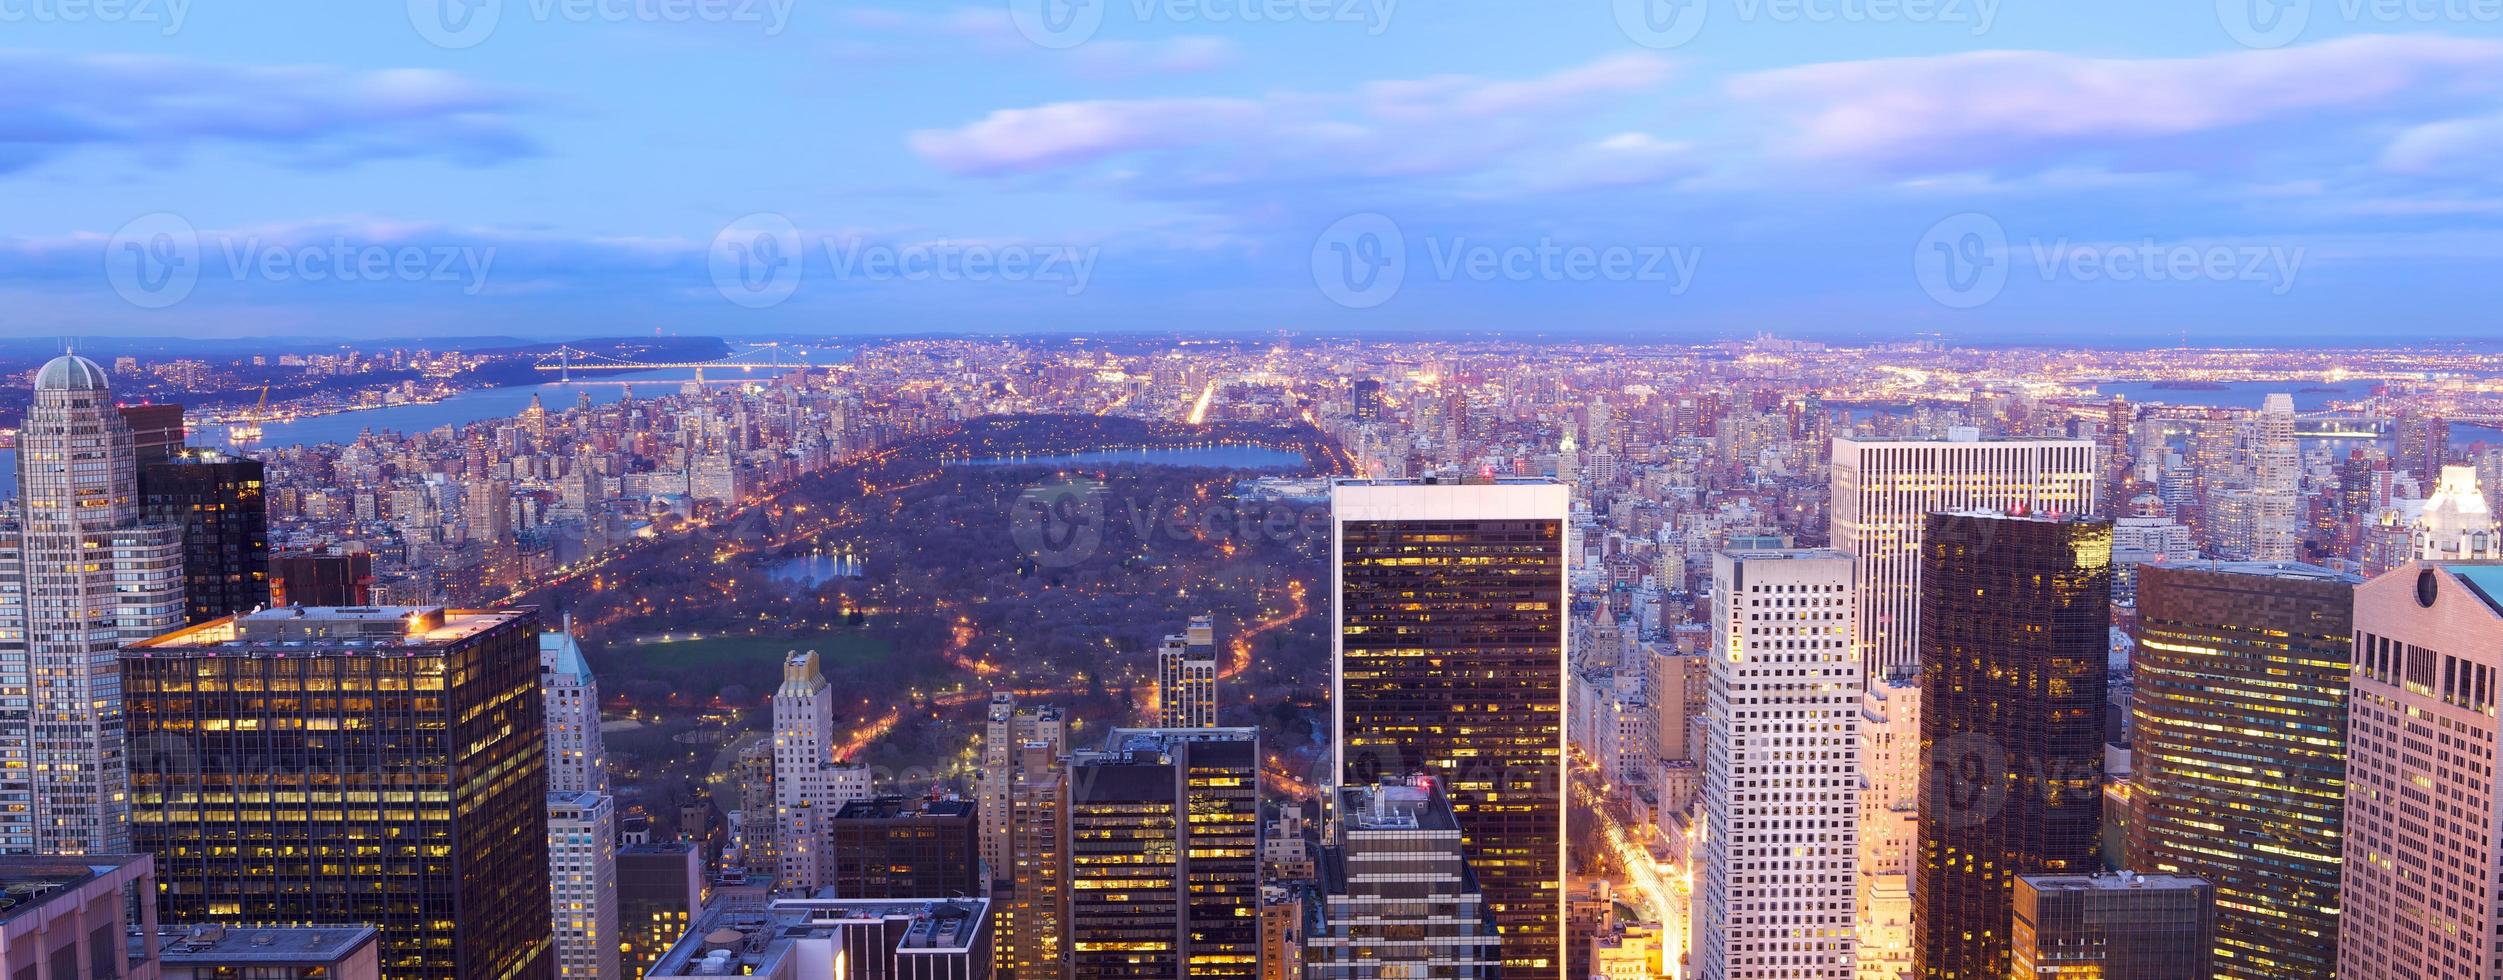 Central Park Luftbild Panorama foto